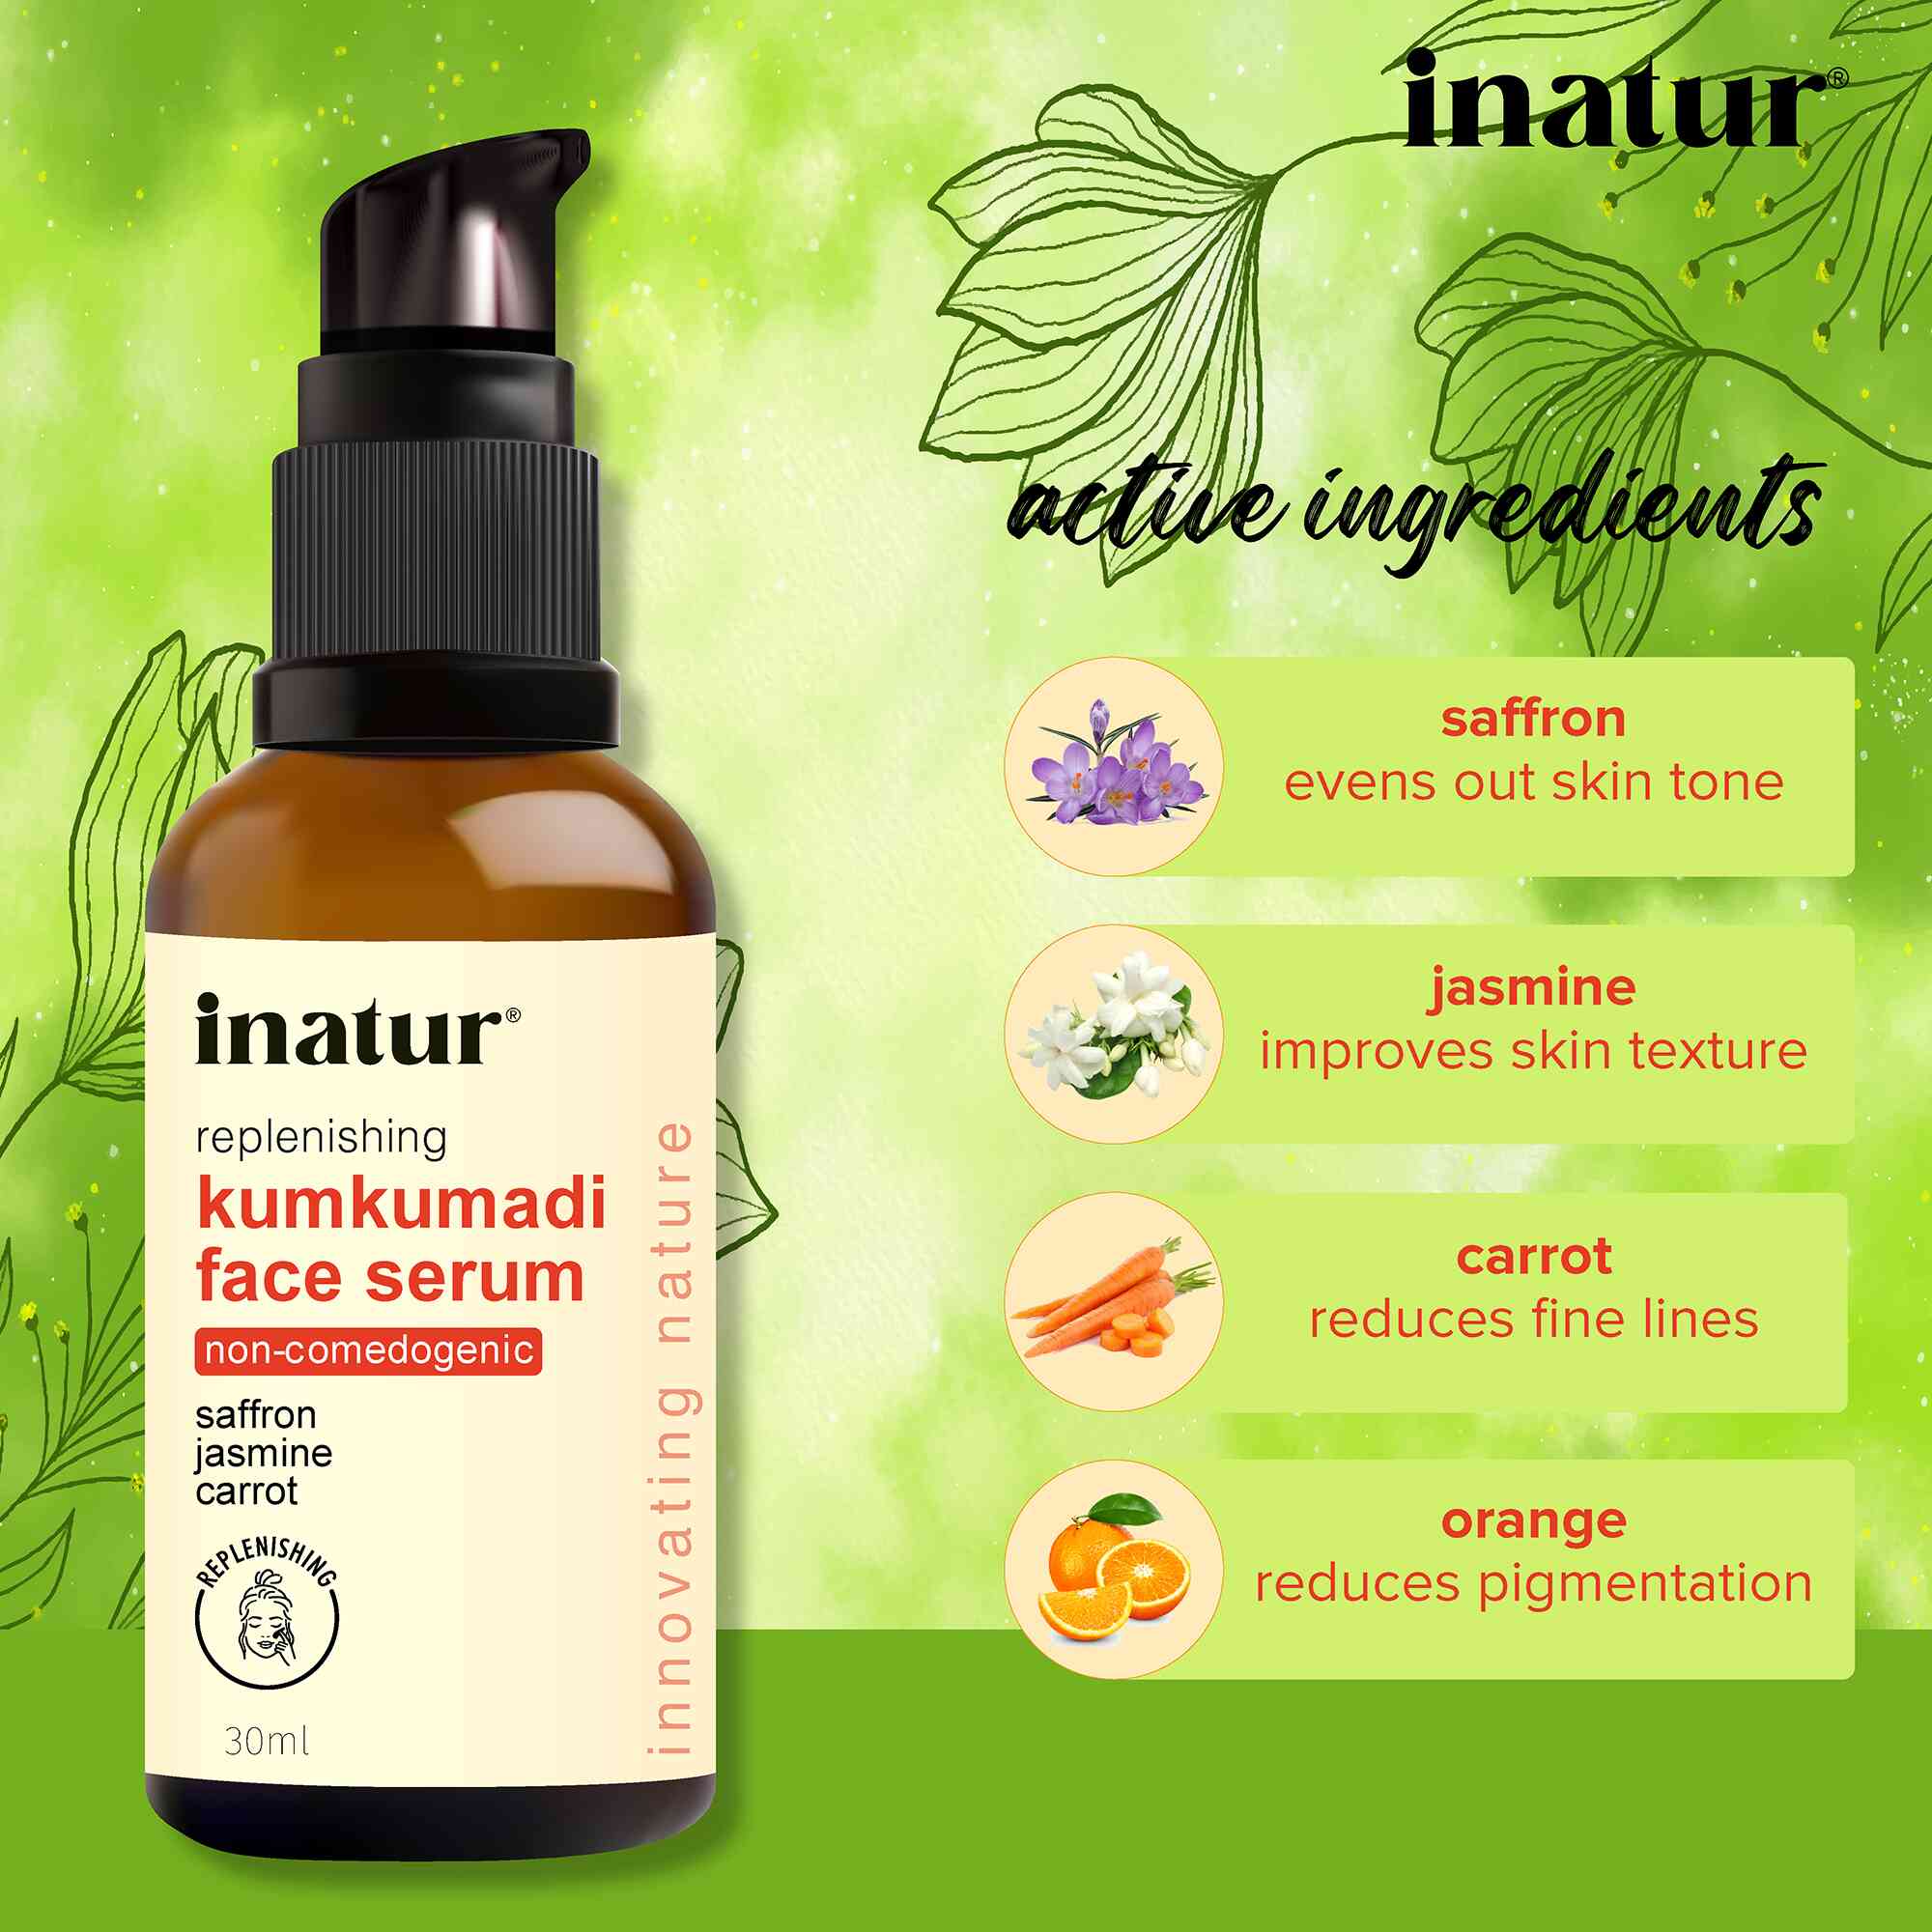 active ingredients of inatur kumkumadi face serum